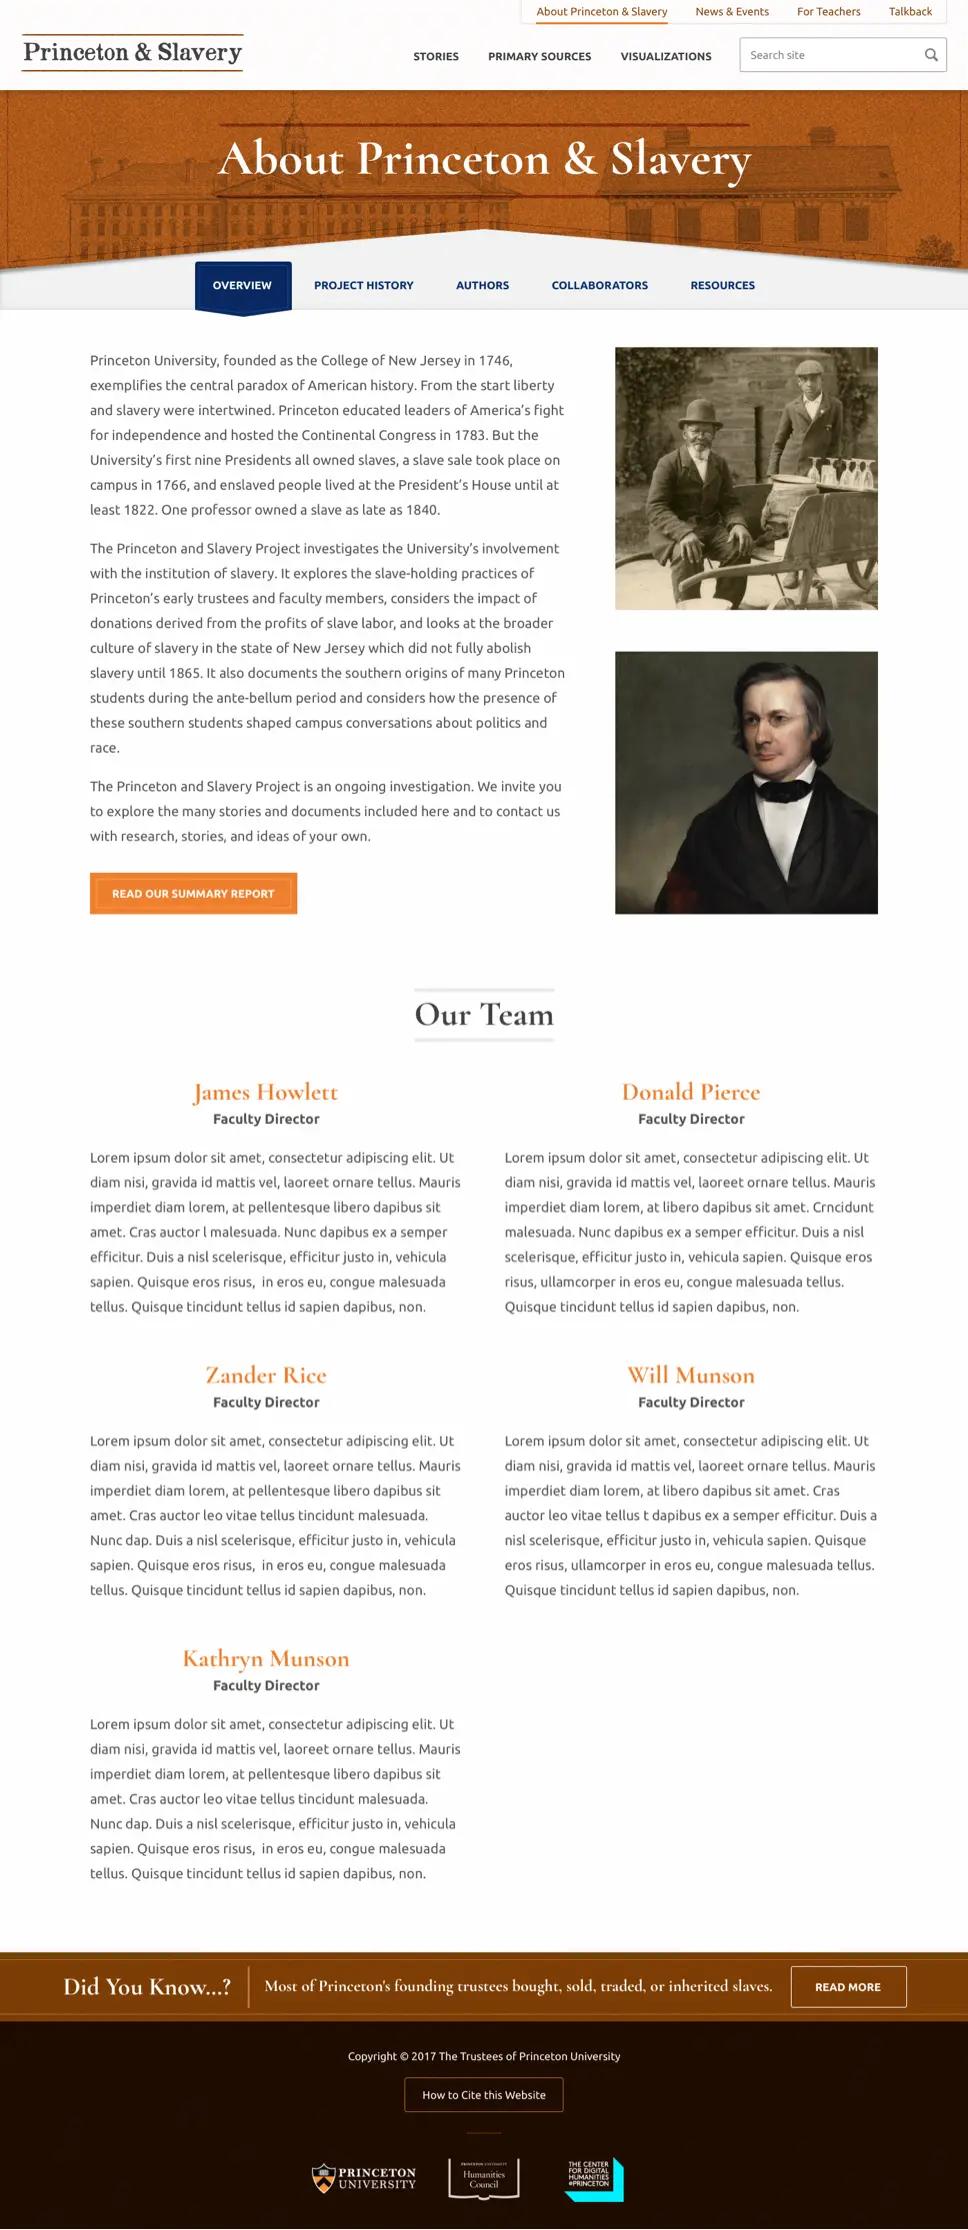 A screenshot of Princeton & Slavery's "About" page.